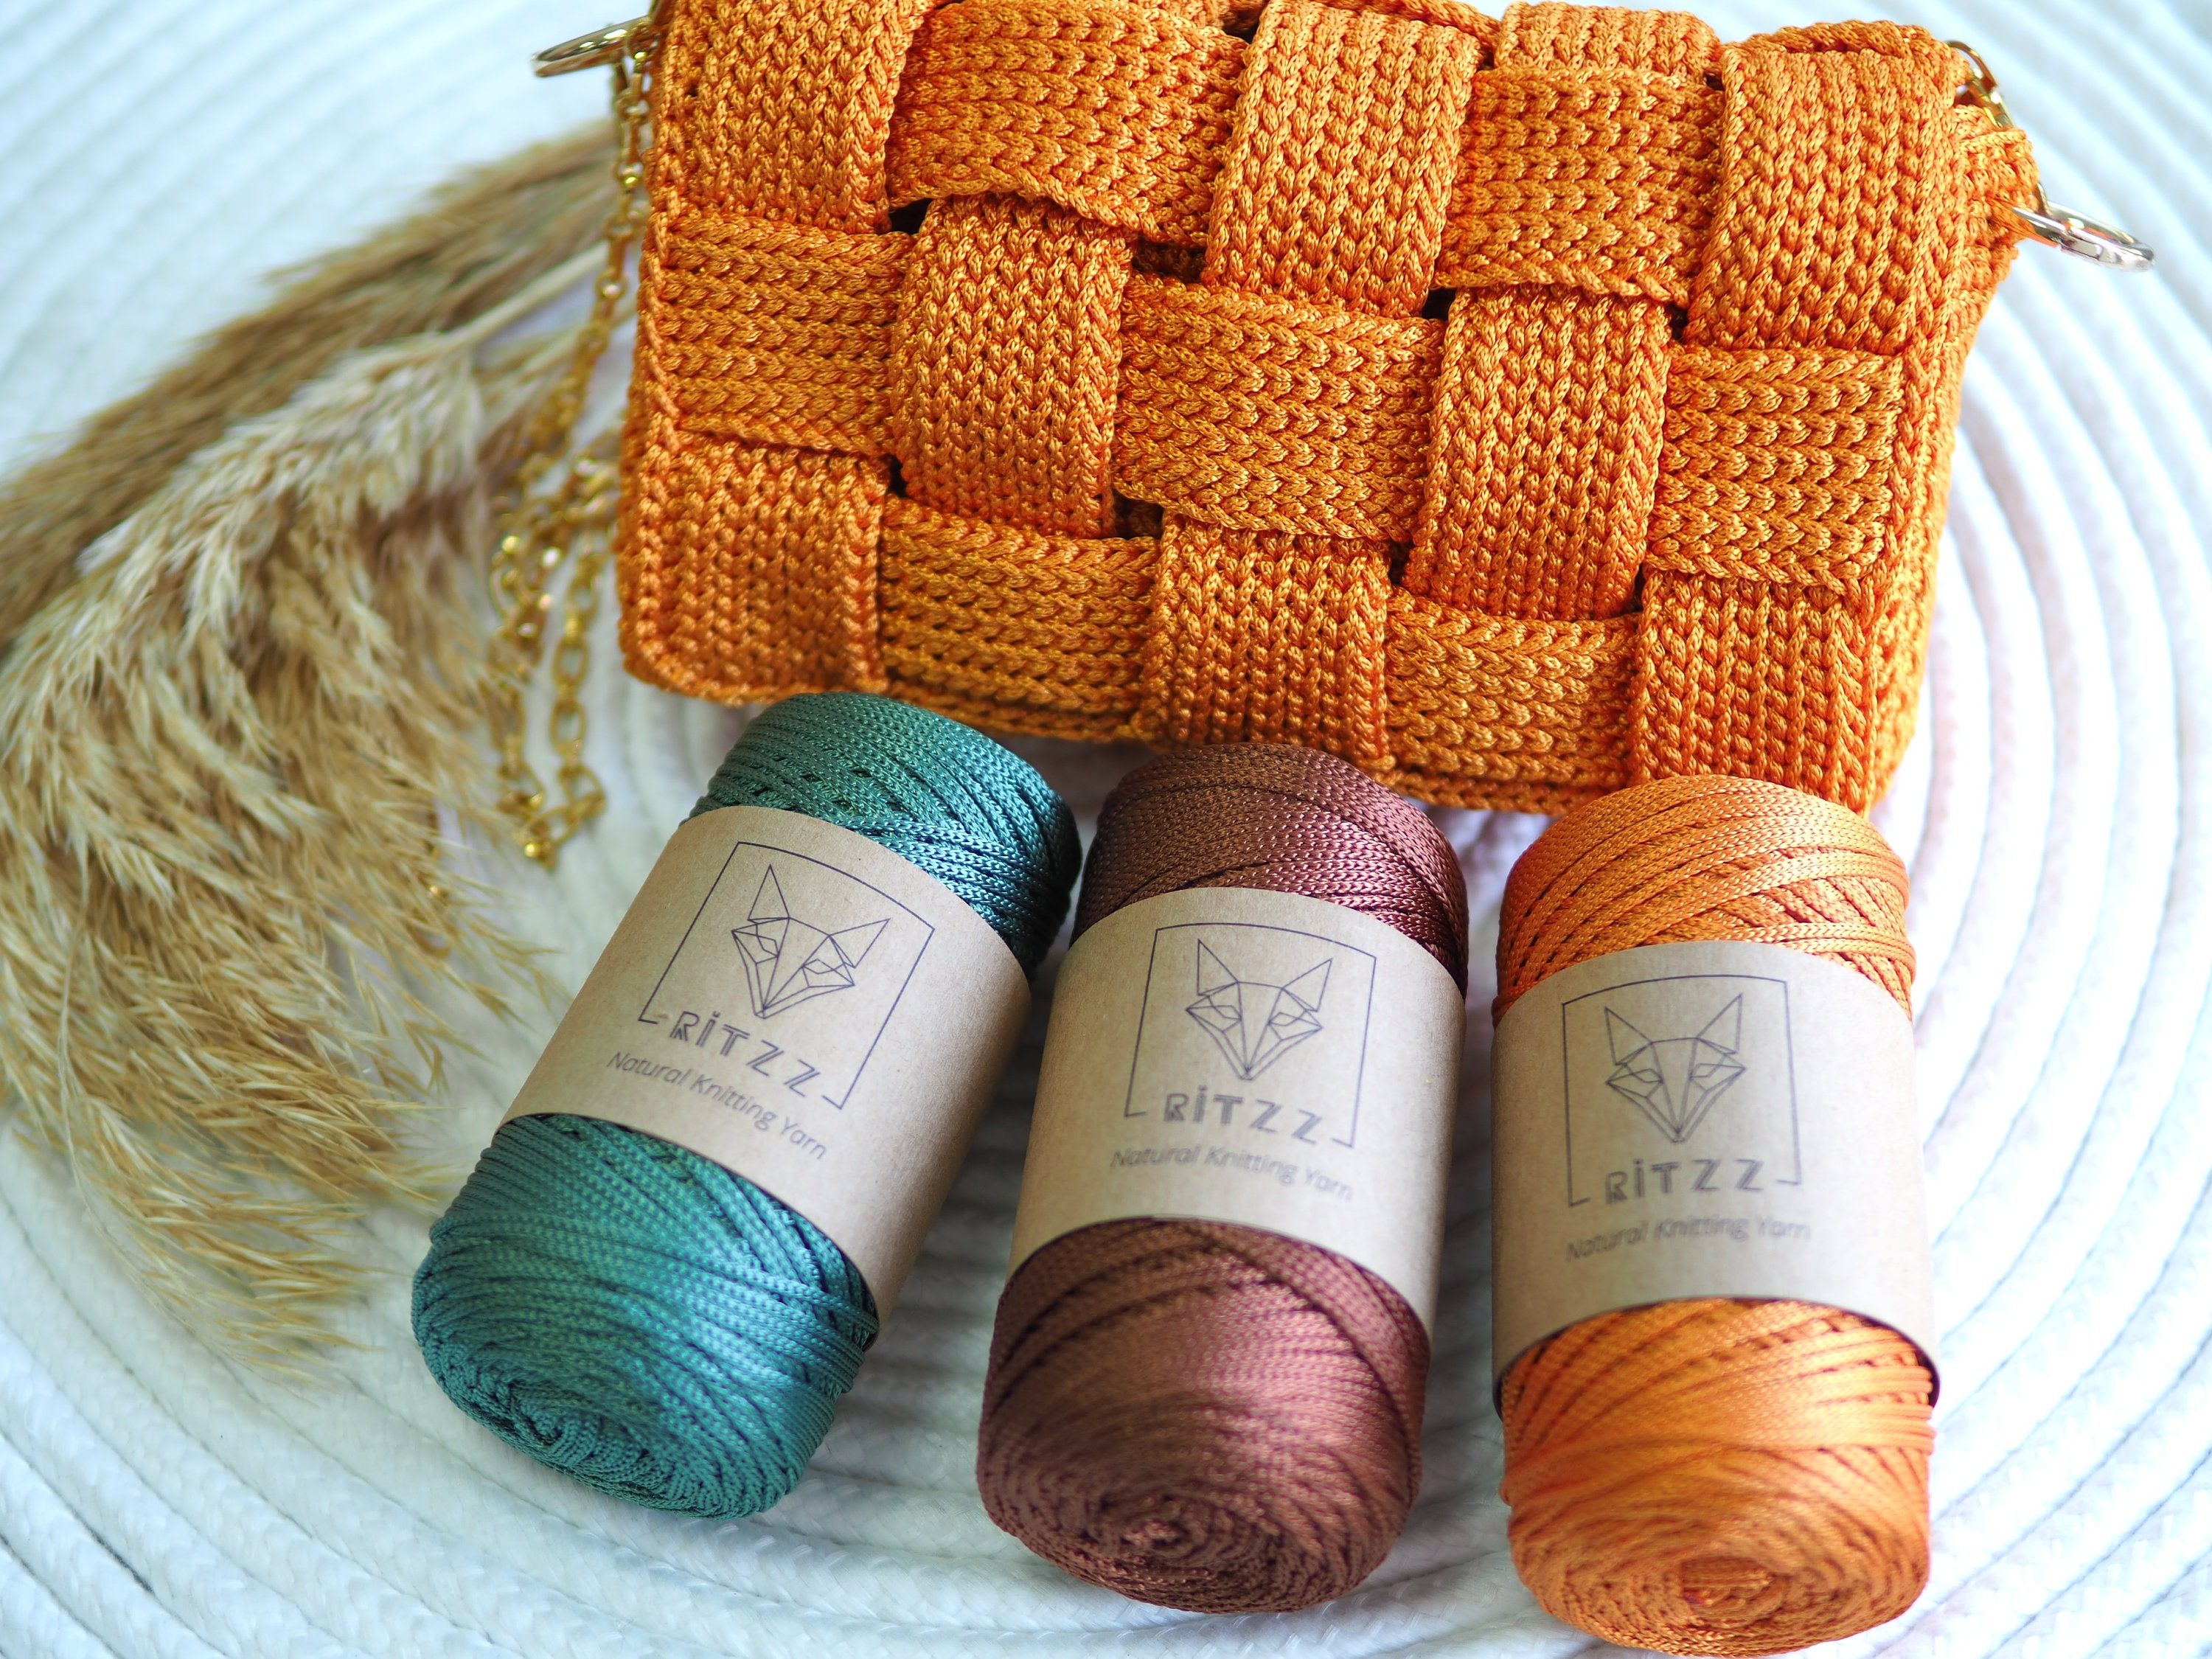 Likeecords 100% Cotton Crochet Yarn for Bag,2mm, 150m,Macrame Cord,Chunky  Yarn for Crocheting Handbag, Purse,Blankets Crafts